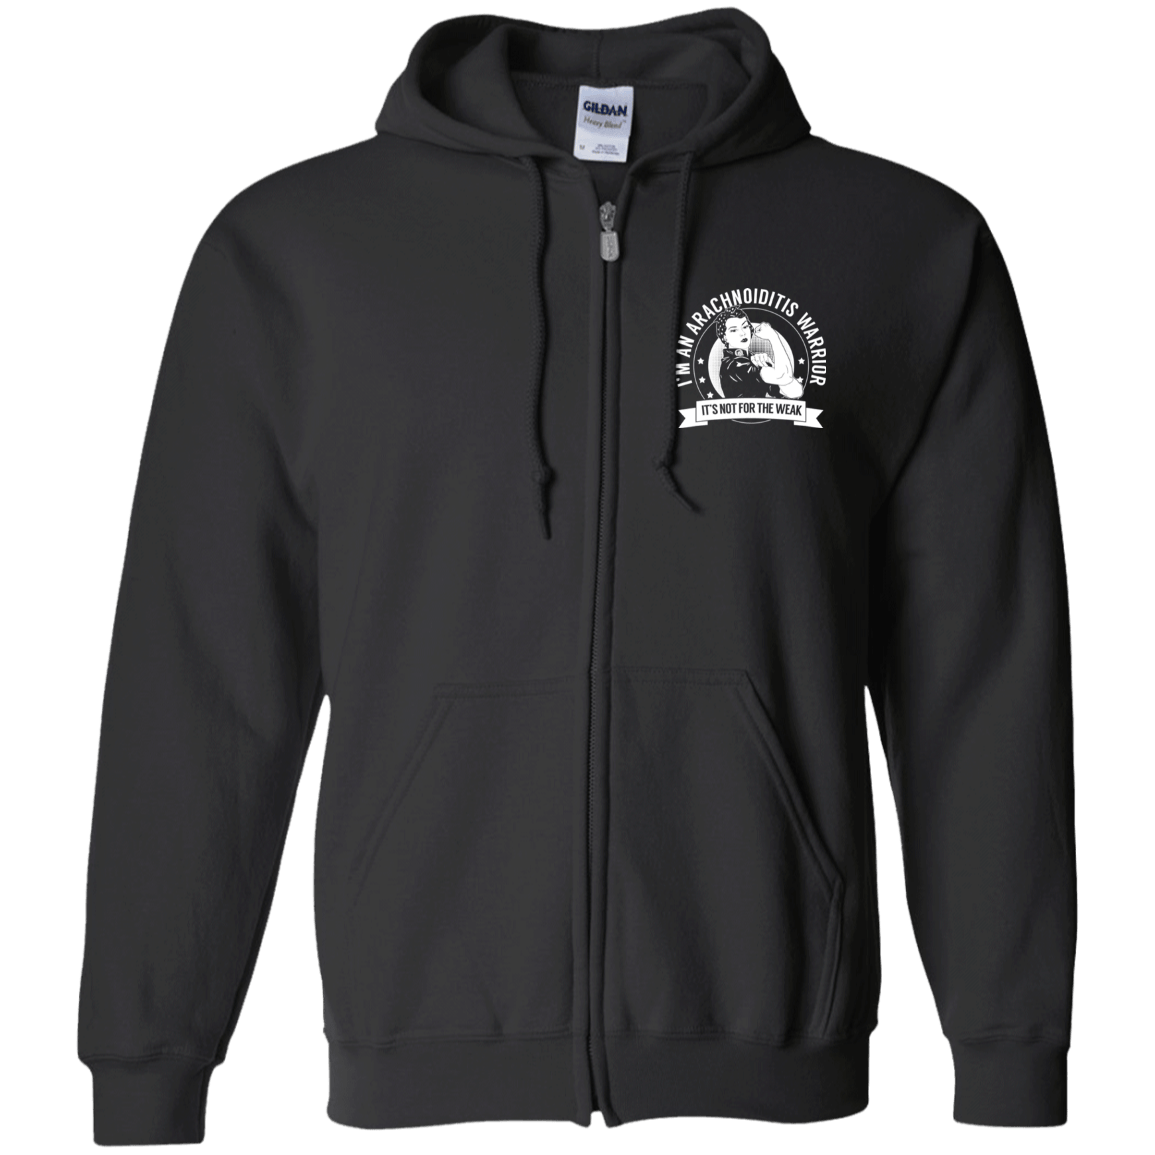 Arachnoiditis Warrior NFTW Zip Up Hooded Sweatshirt - The Unchargeables